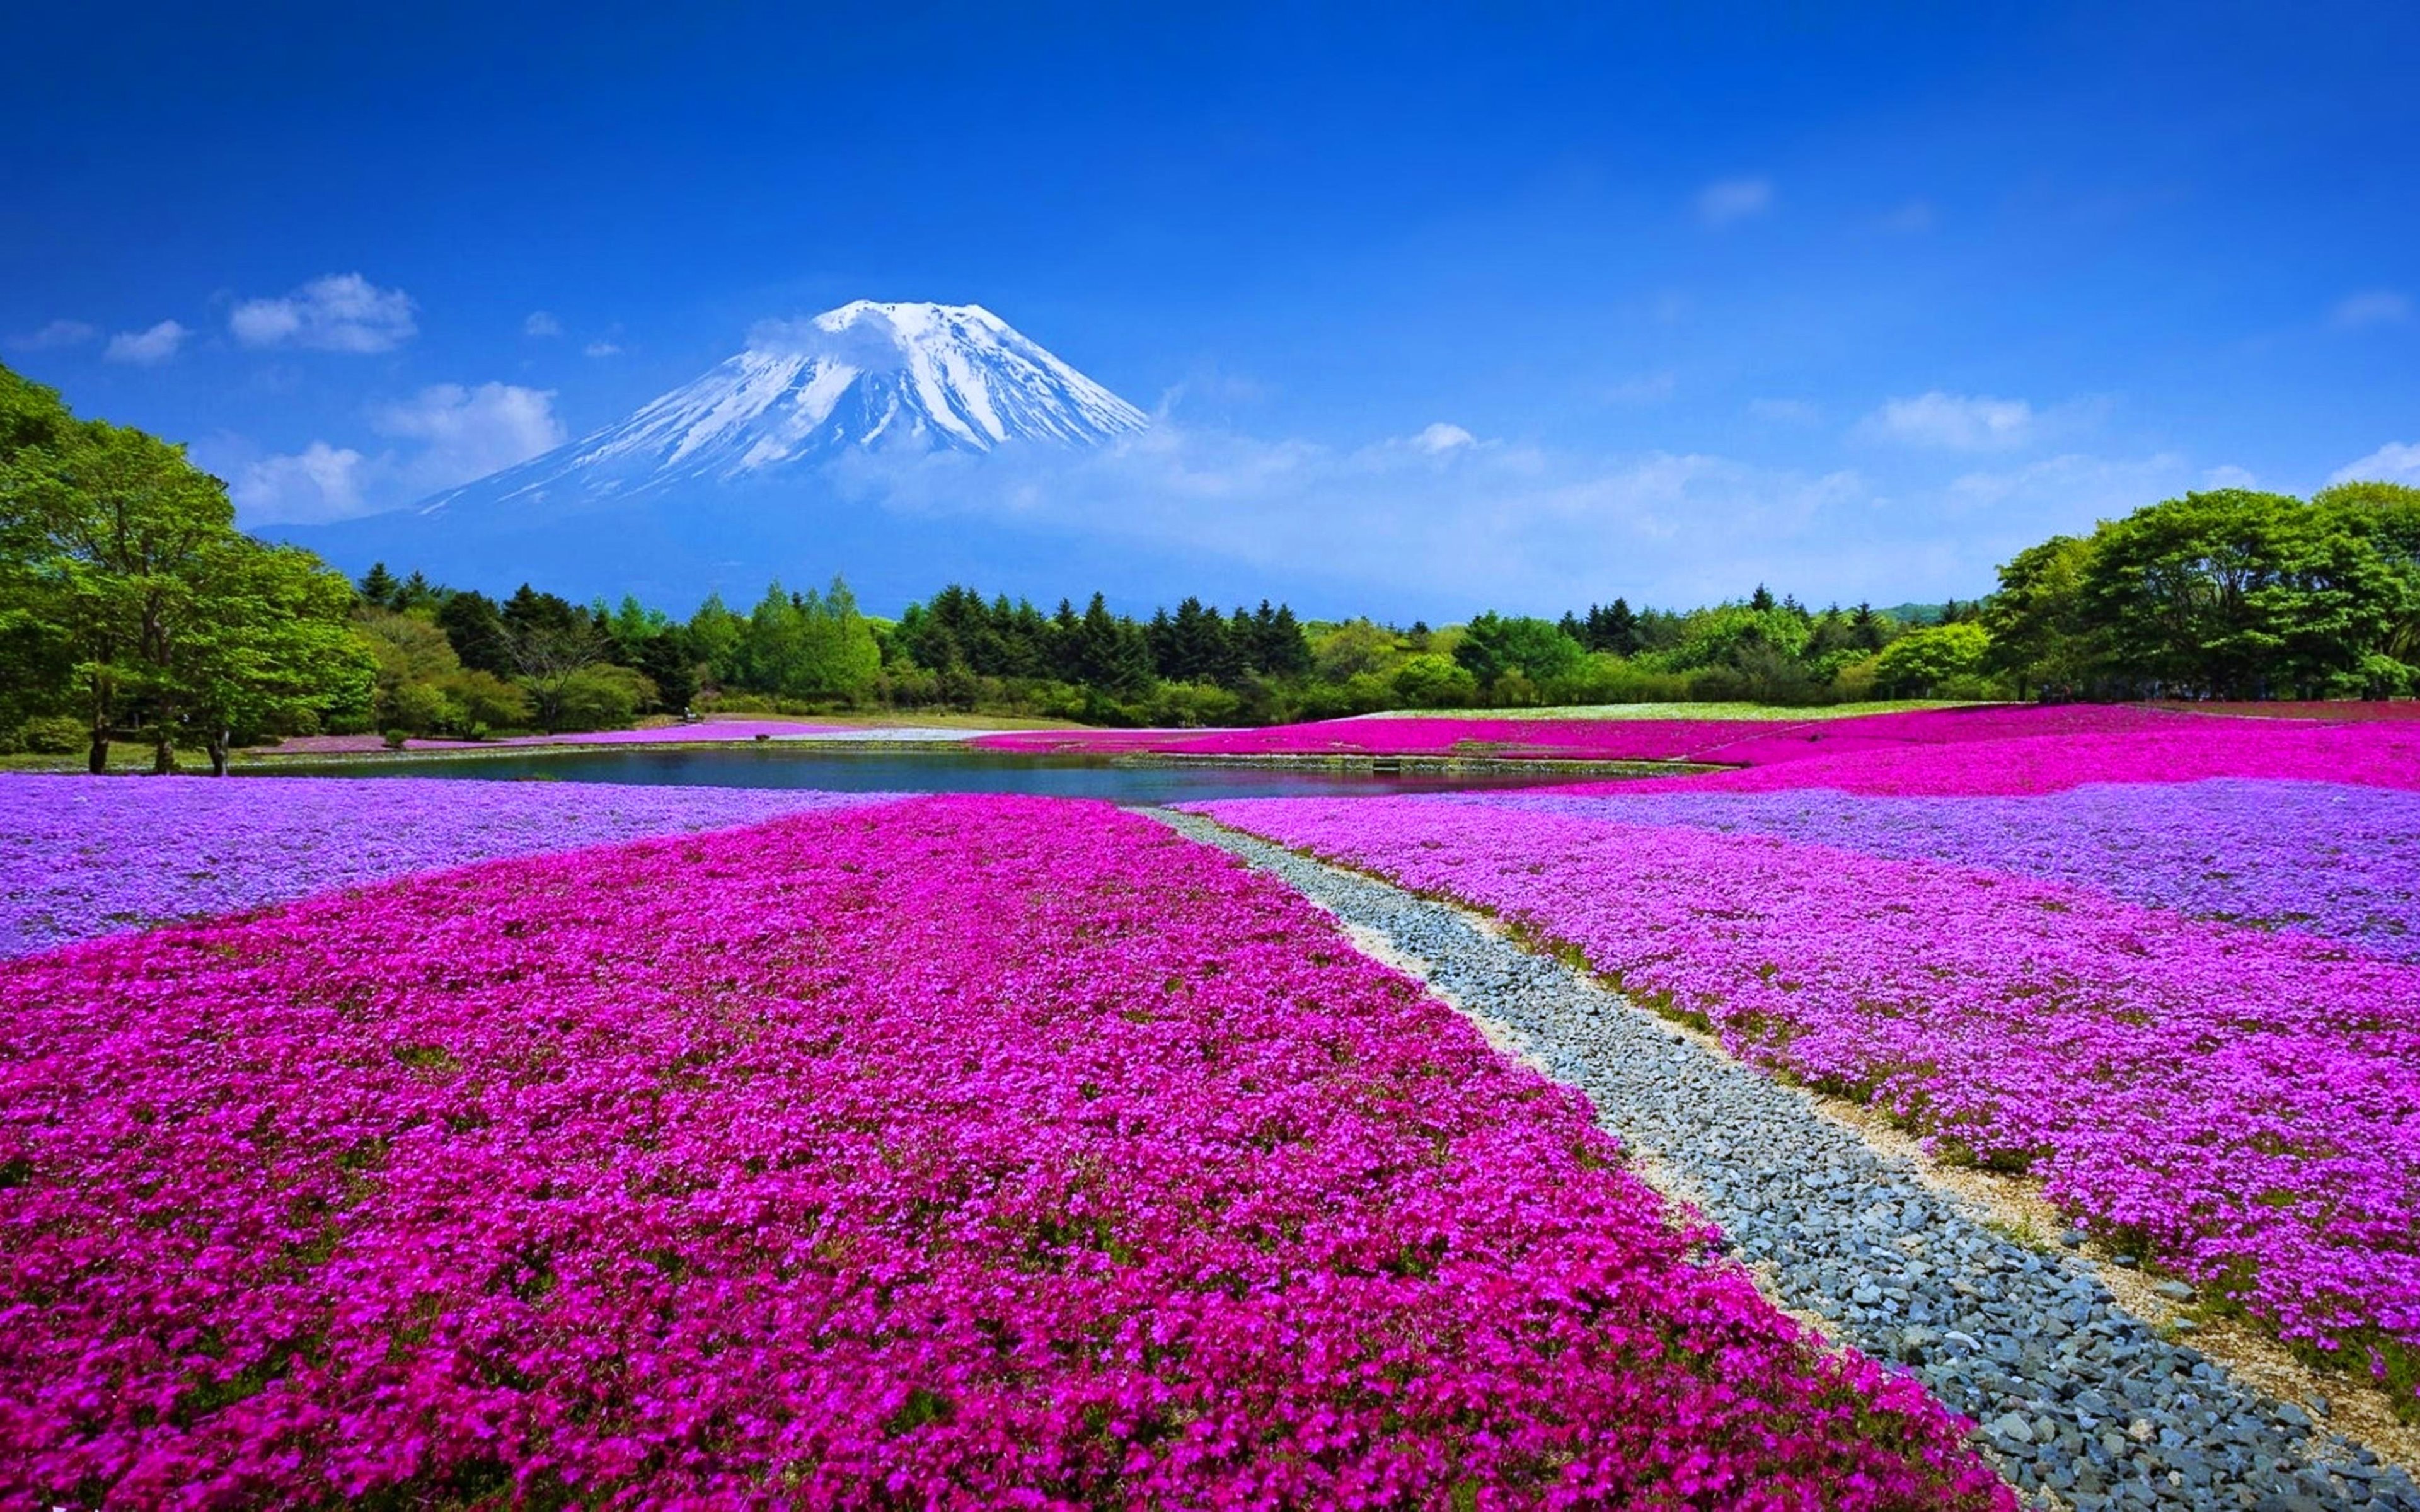 Download wallpaper Mount Fuji, flower field, summer, Asia